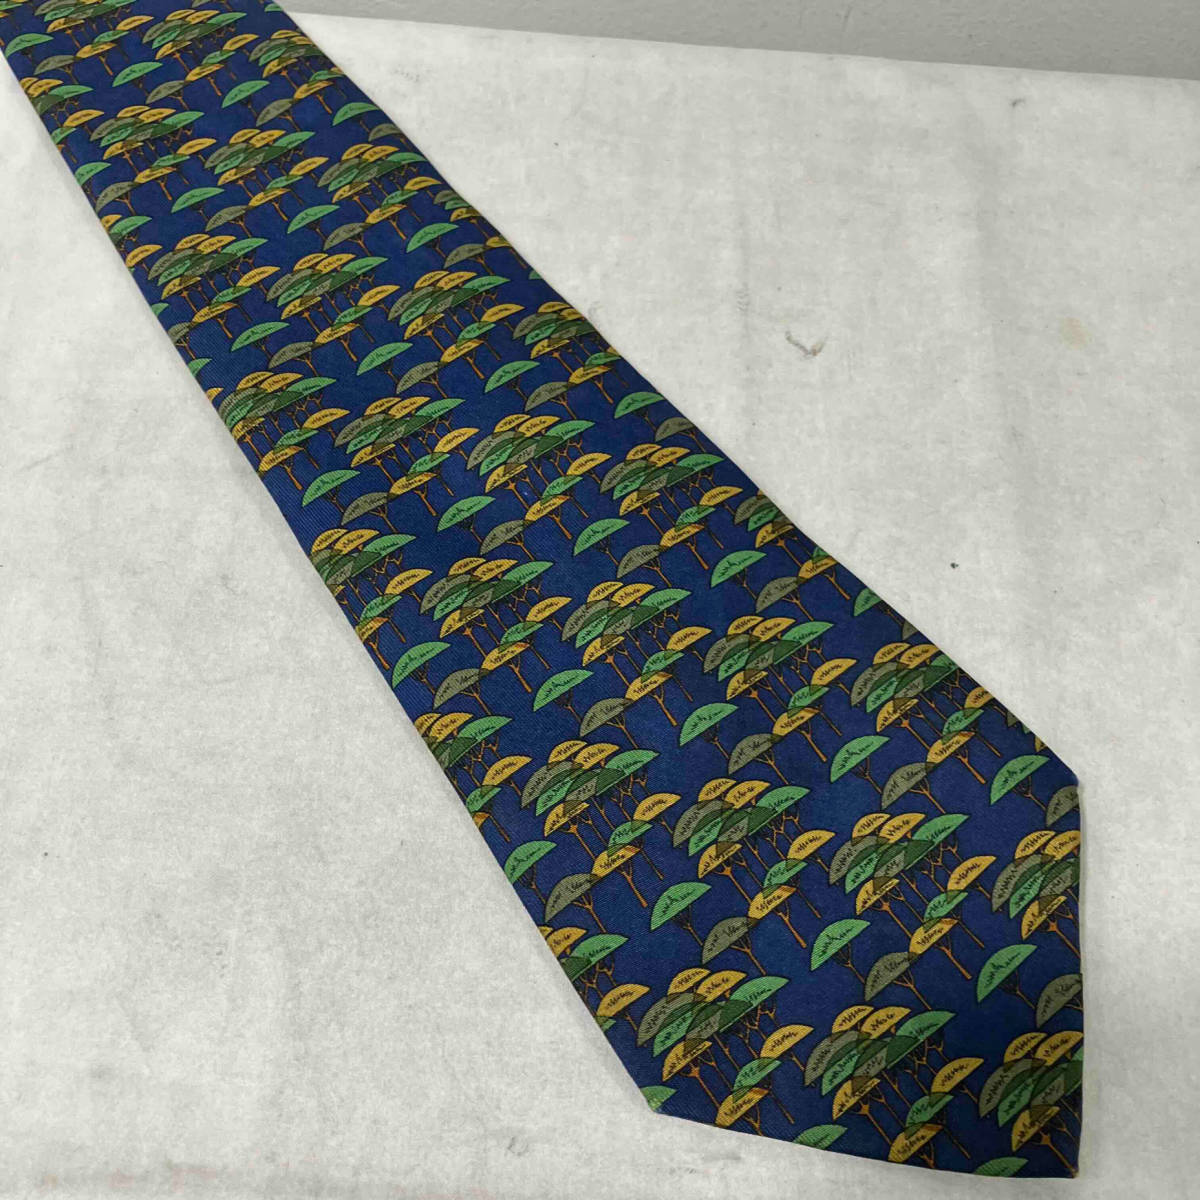 Salvatore Ferragamo Patterned Silk Tie Made in Italy Navy サルヴァトーレフェラガモ 総柄ネクタイ シルク ネイビーベース イタリア製_画像2